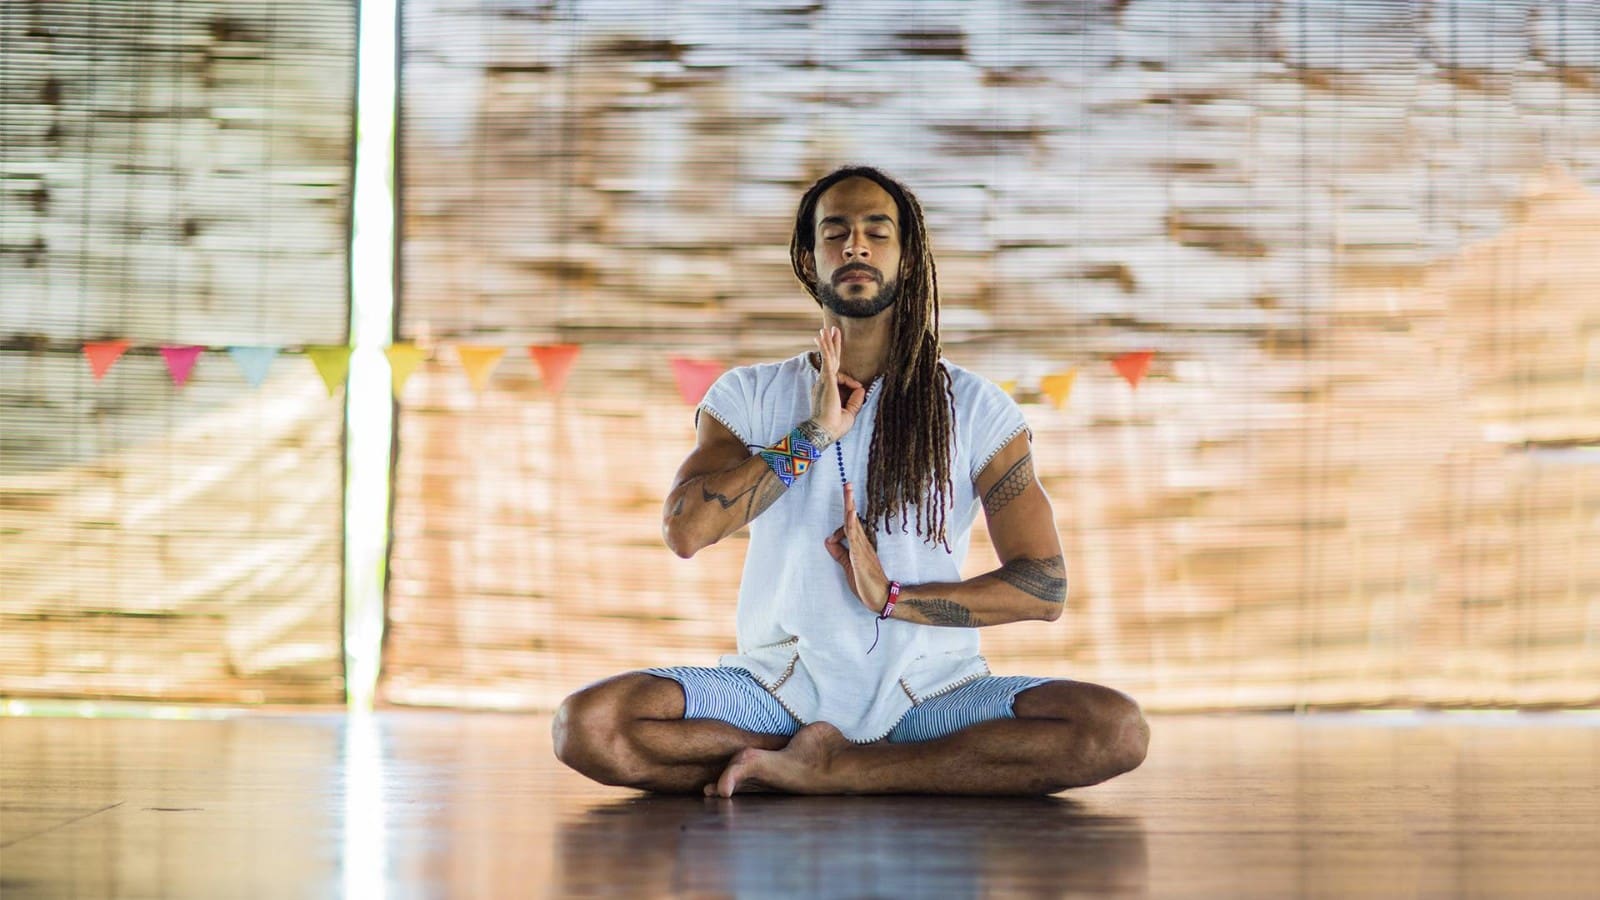 10 Best Yoga Teachers In Bali For A Rejuvenating Practice